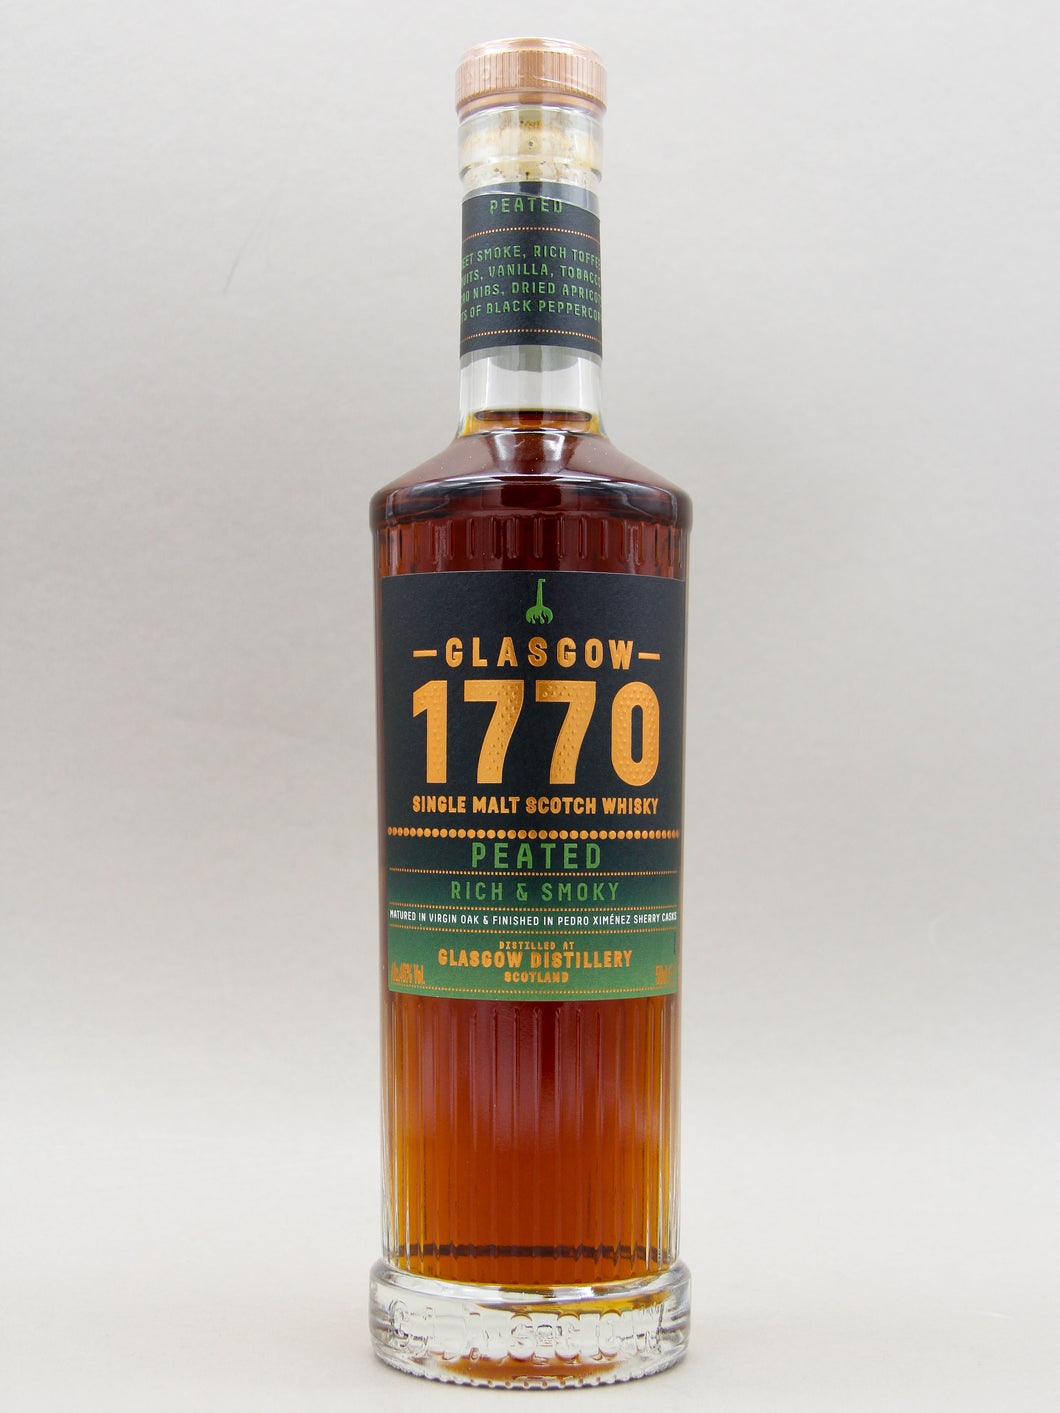 Glasgow Distillery, 1770 Peated , Rich & Smoky, Single Malt Whisky, Scotland (46%, 50cl)